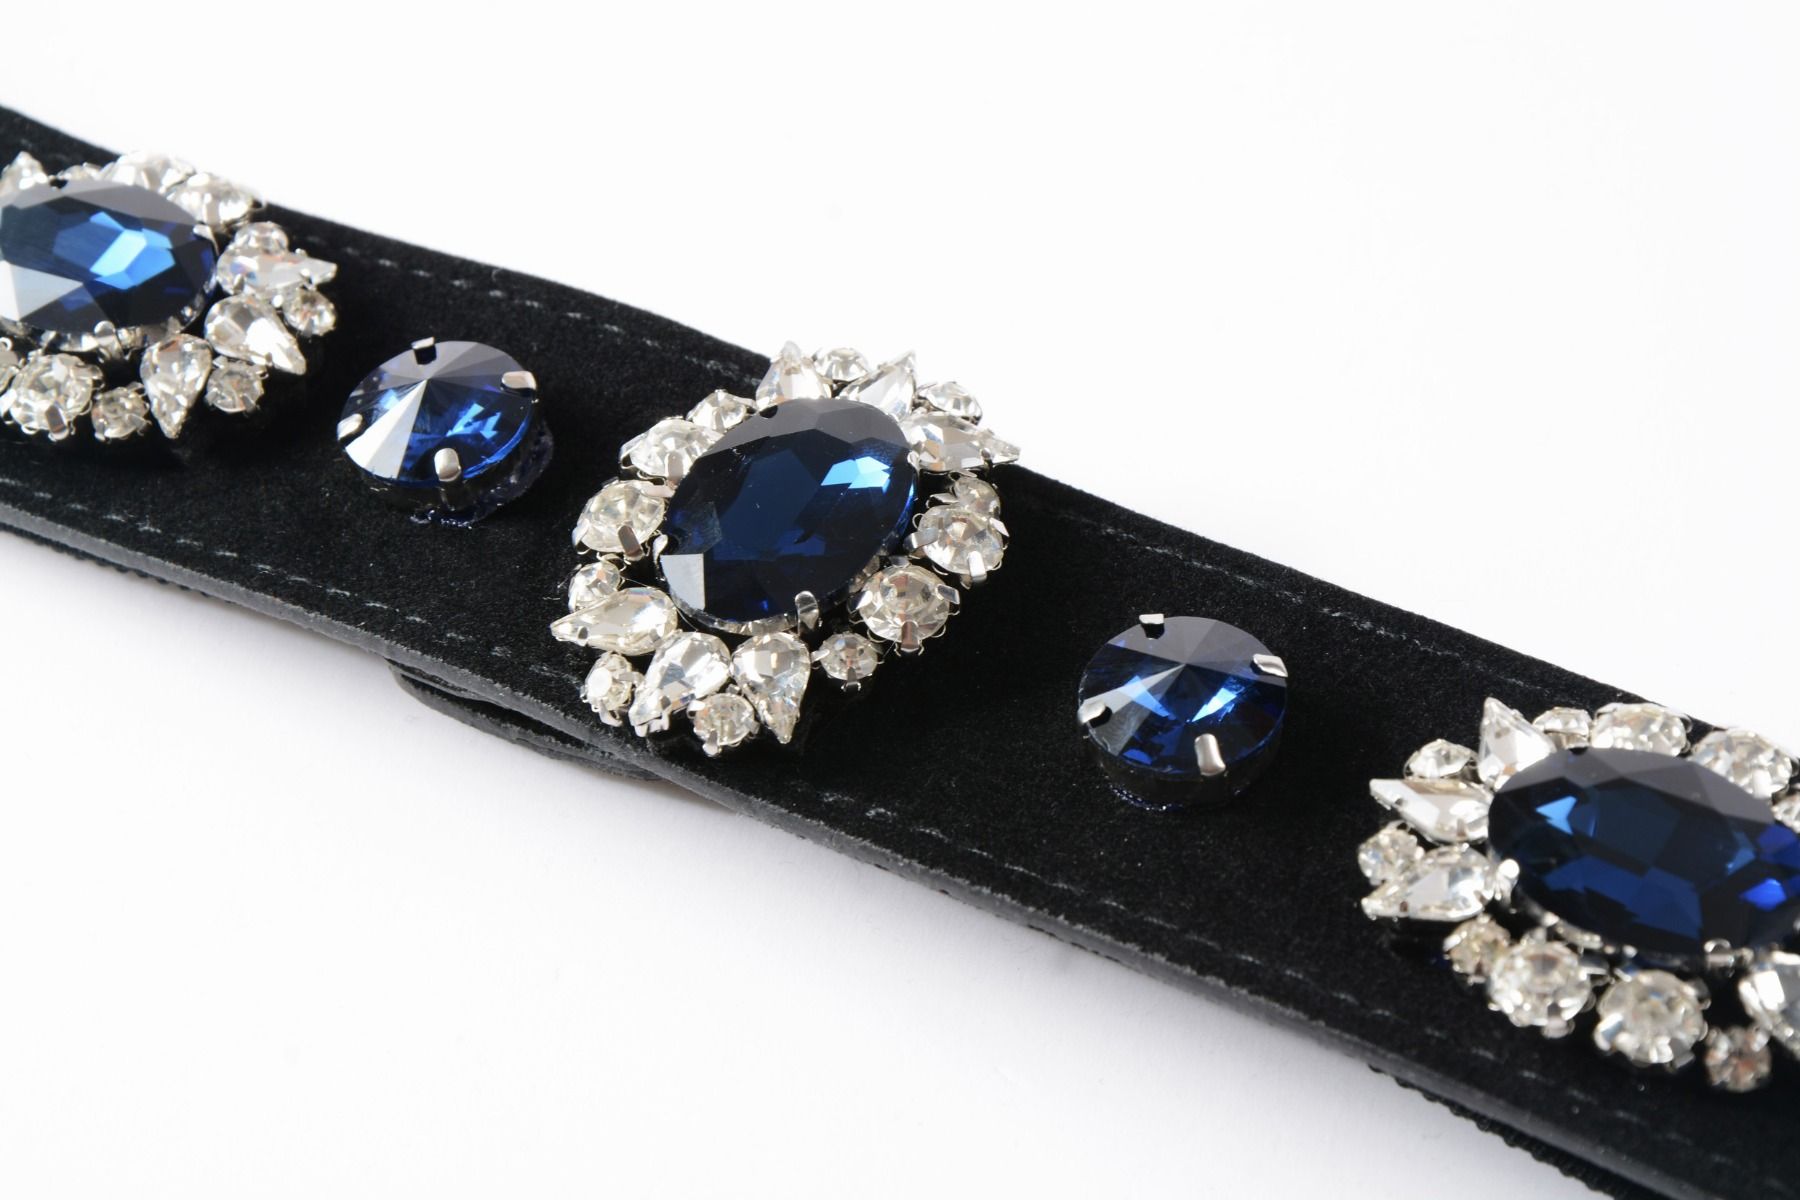 Blue Stones belt